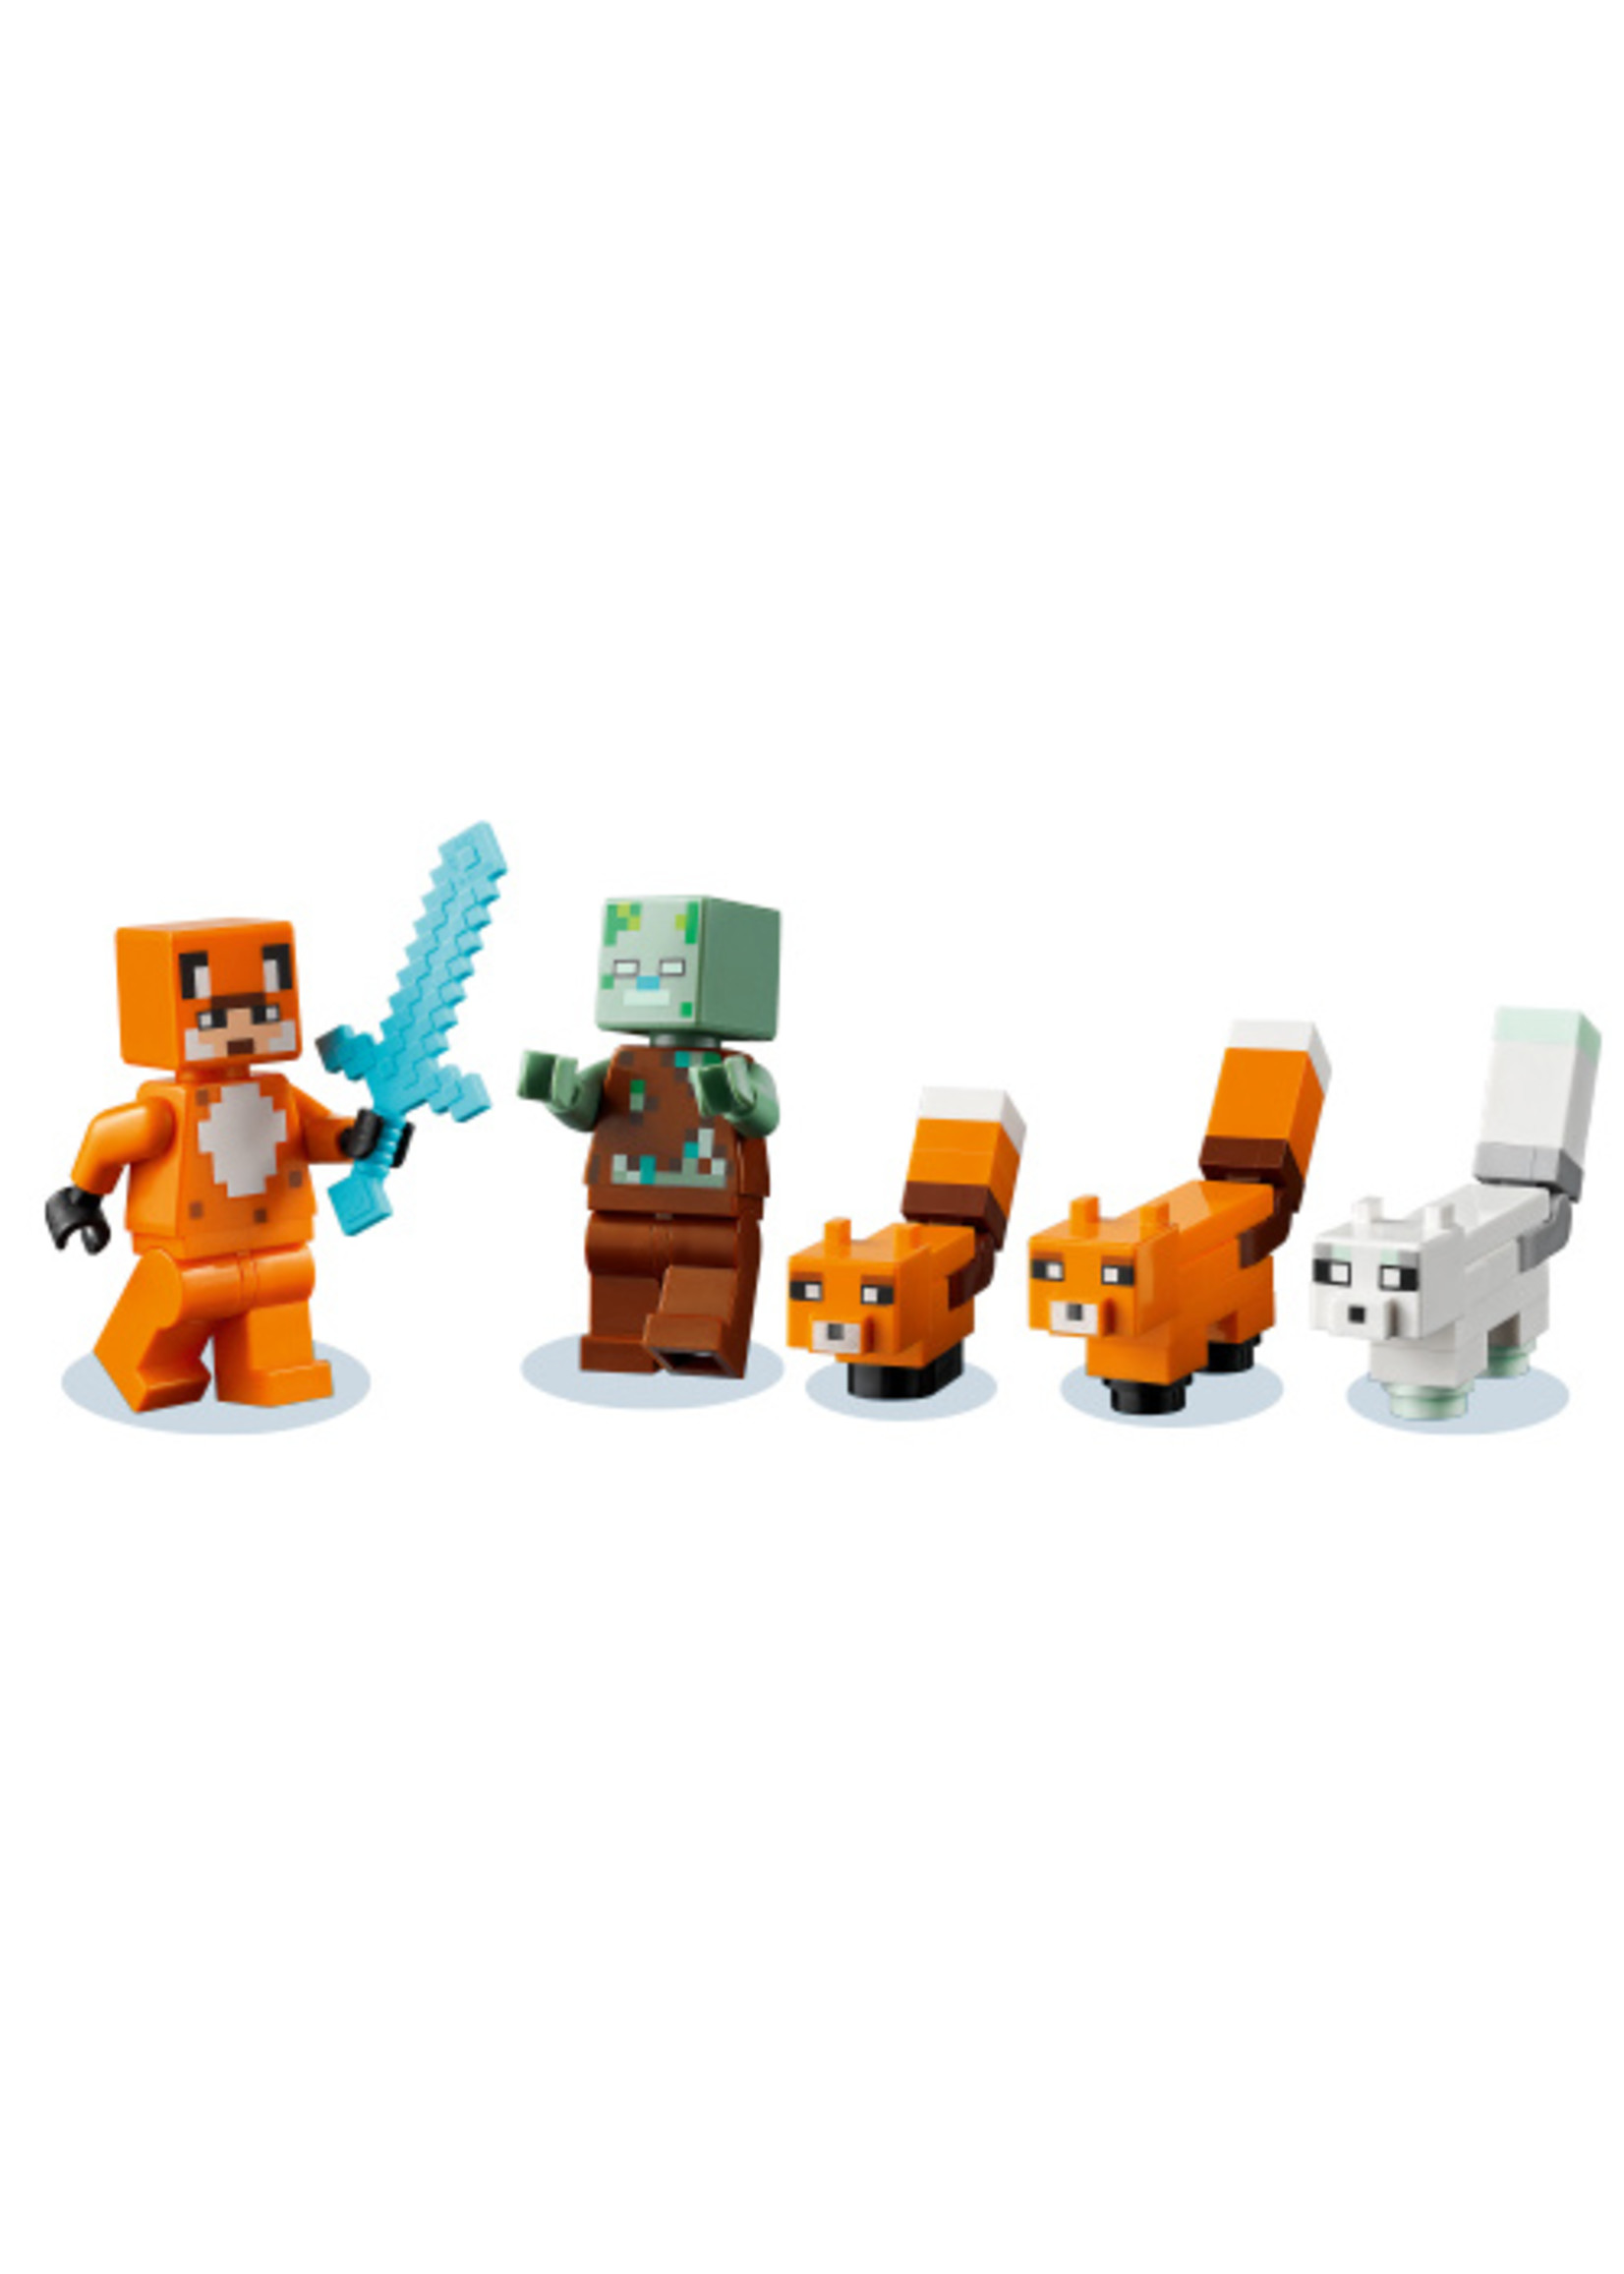 LEGO 21178 - The Fox Lodge